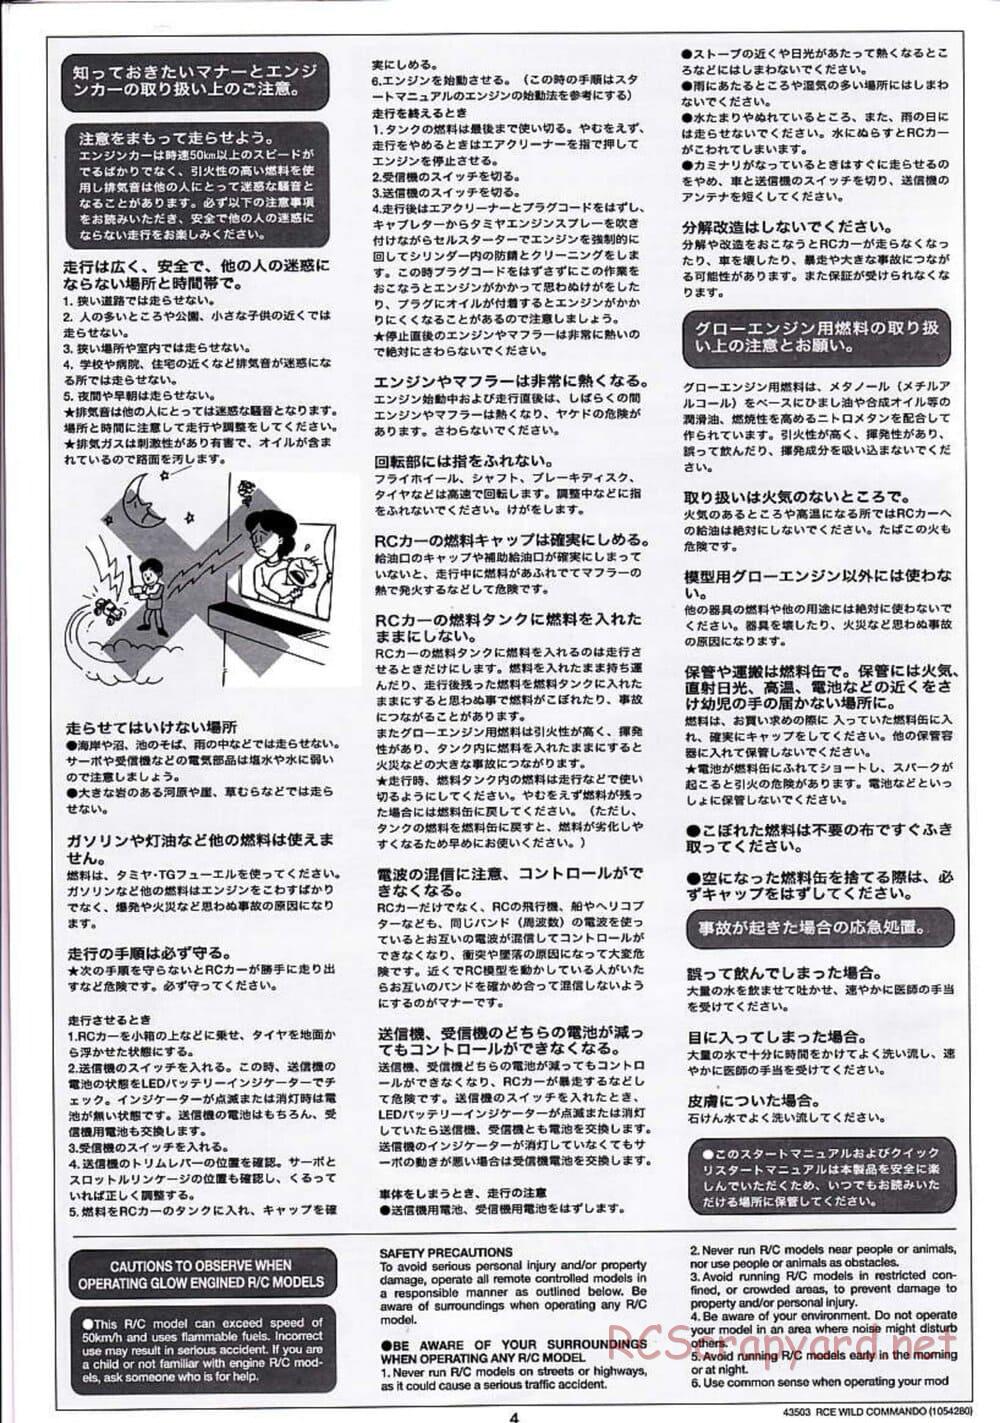 Tamiya - Wild Commando - TGM-02 Chassis - Manual - Page 4